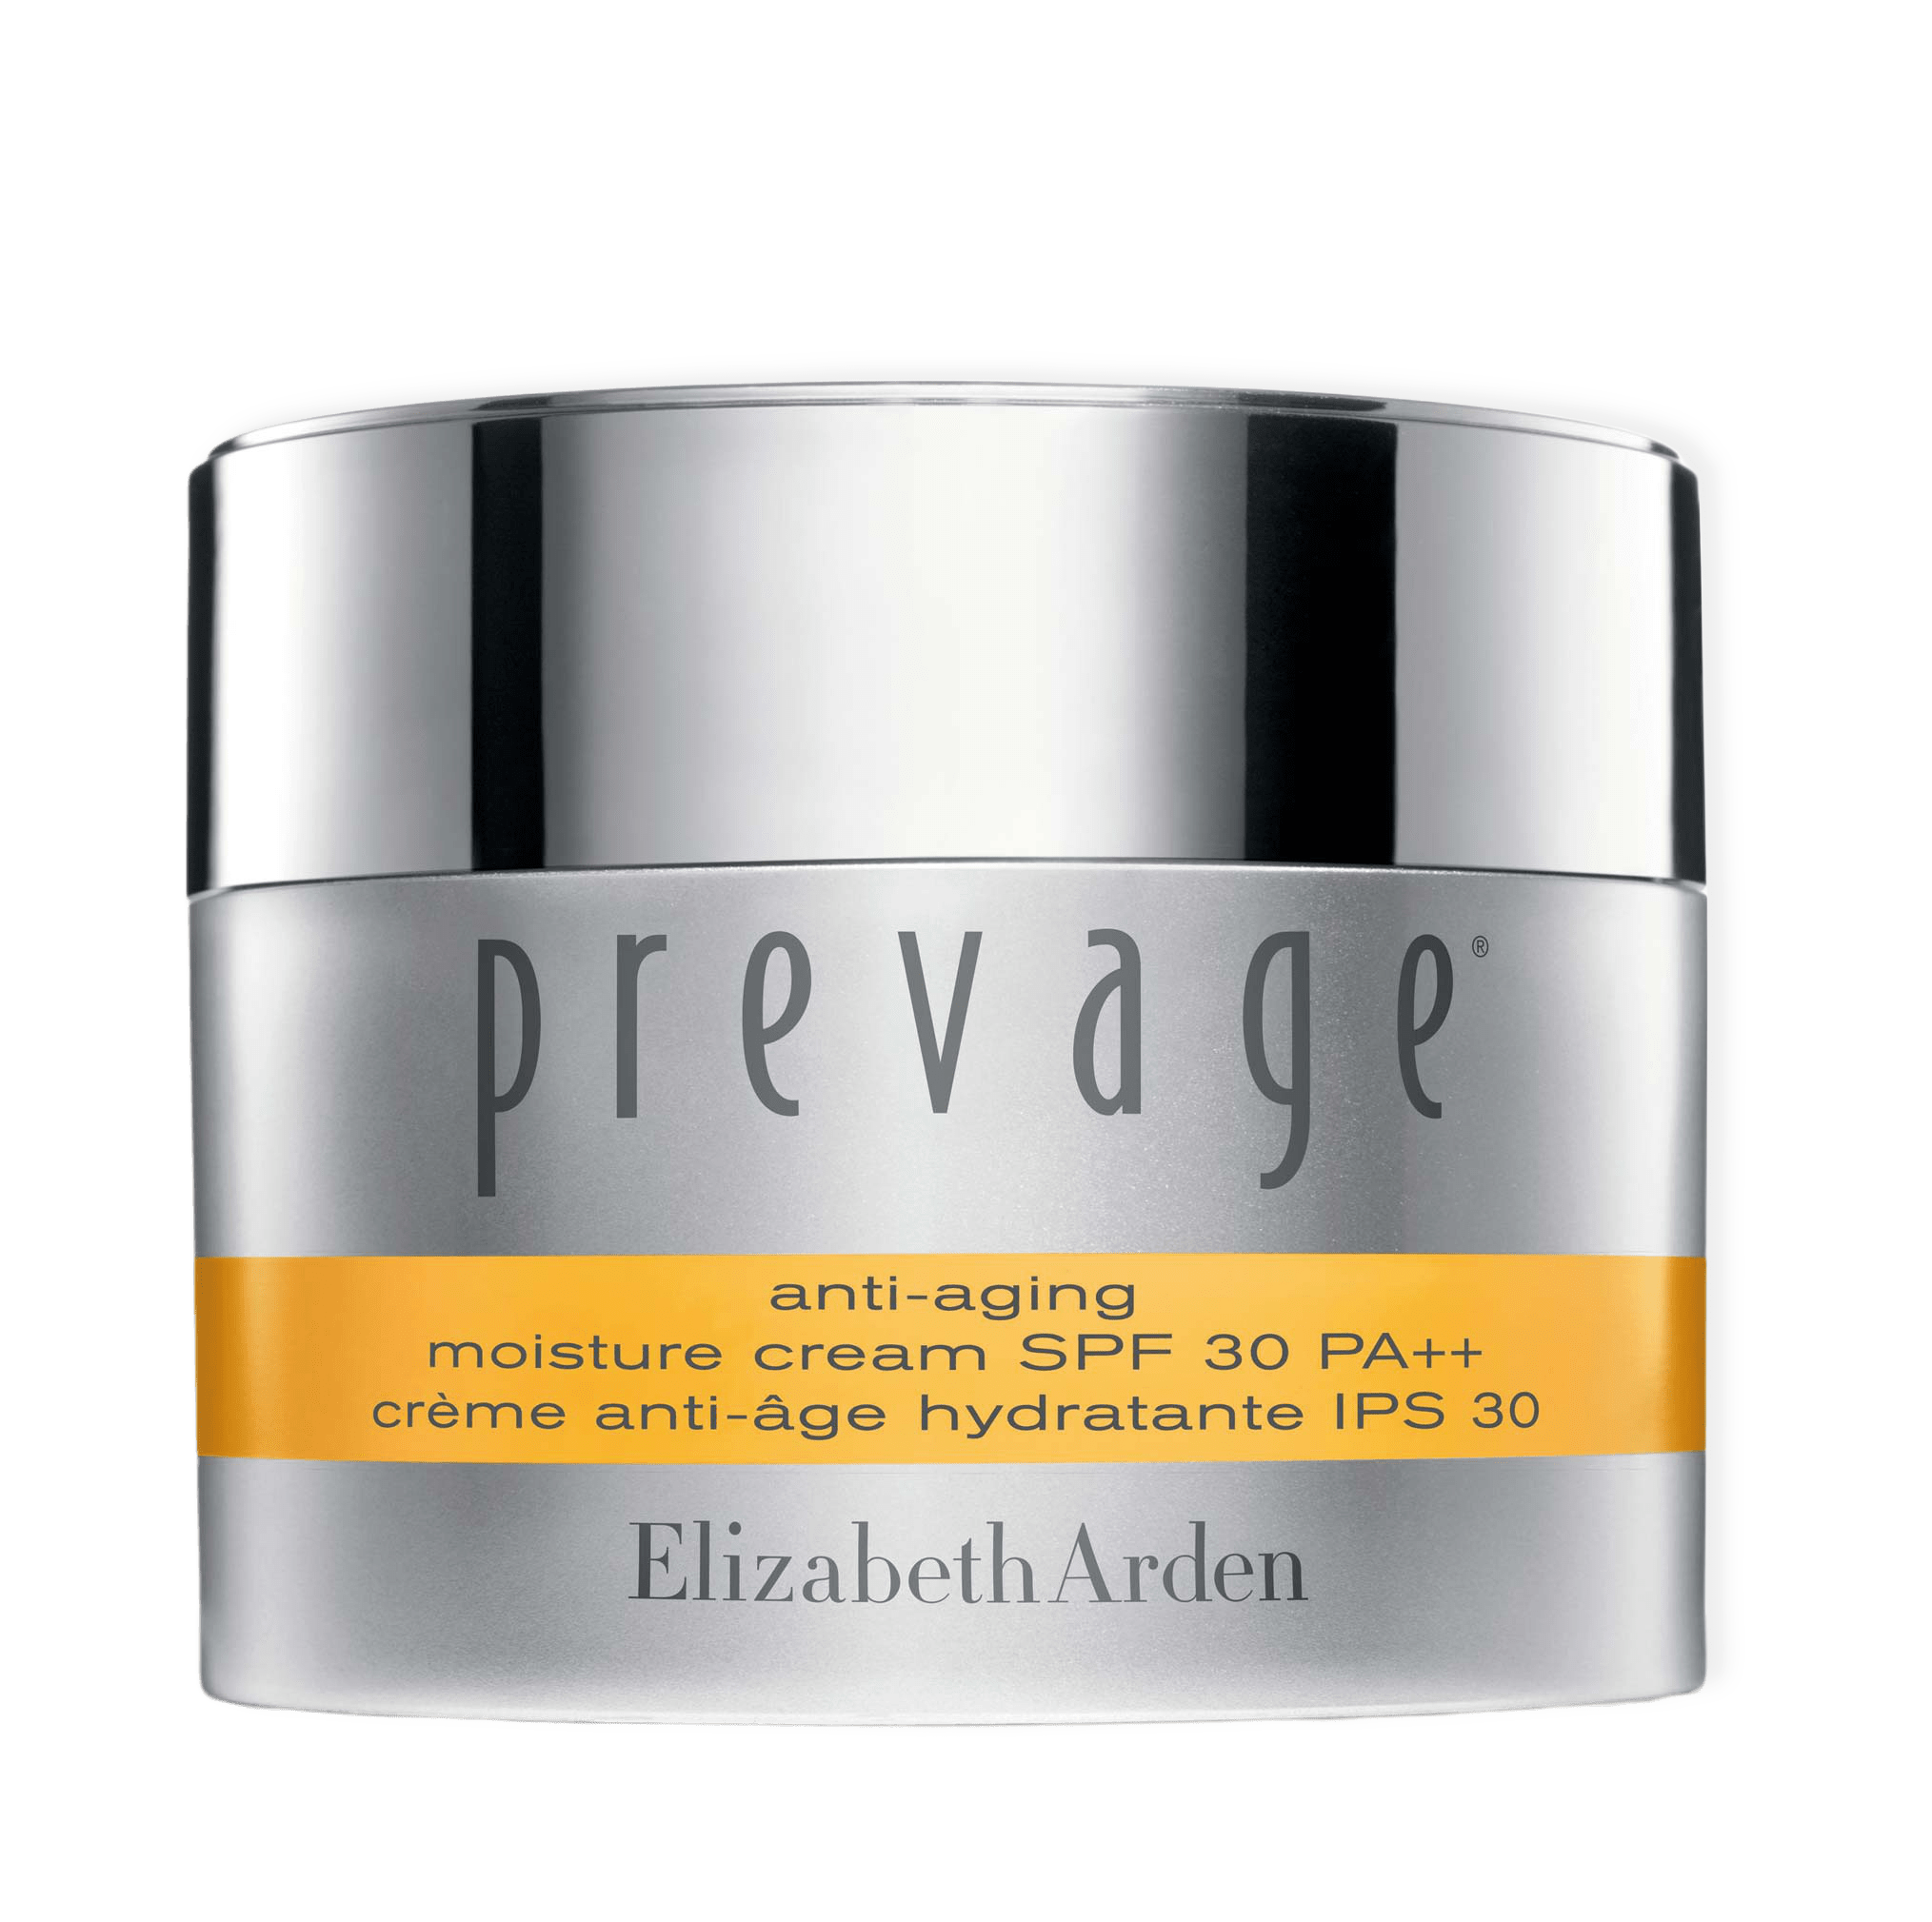 Prevage® Anti-aging Moisture Cream SPF 30 från Elizabeth Arden